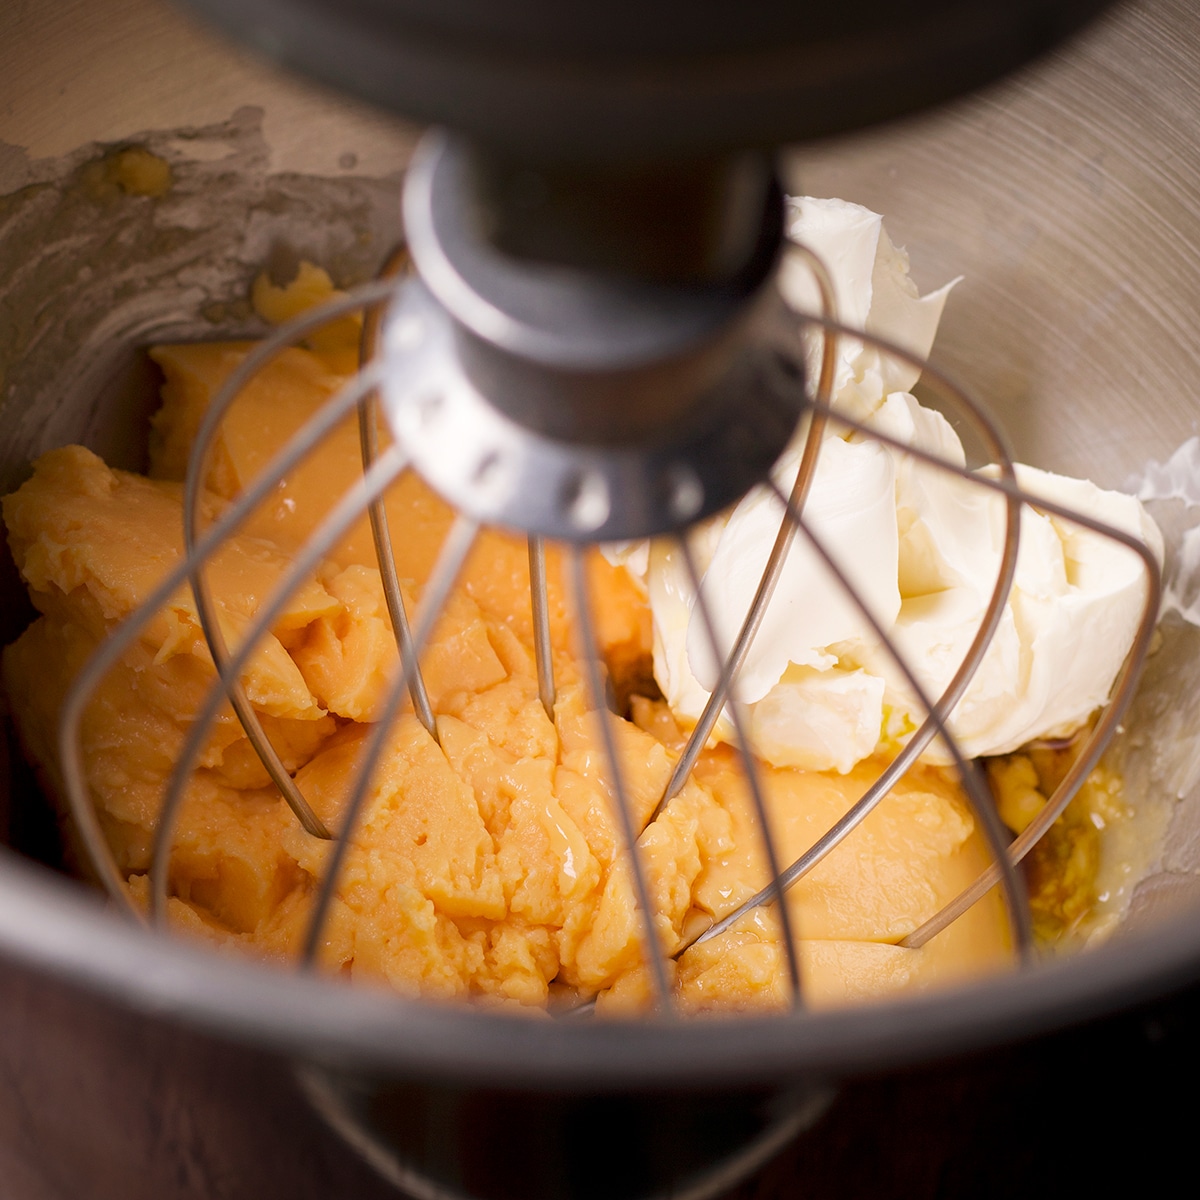 Beating mascarpone cheese into pastry cream.